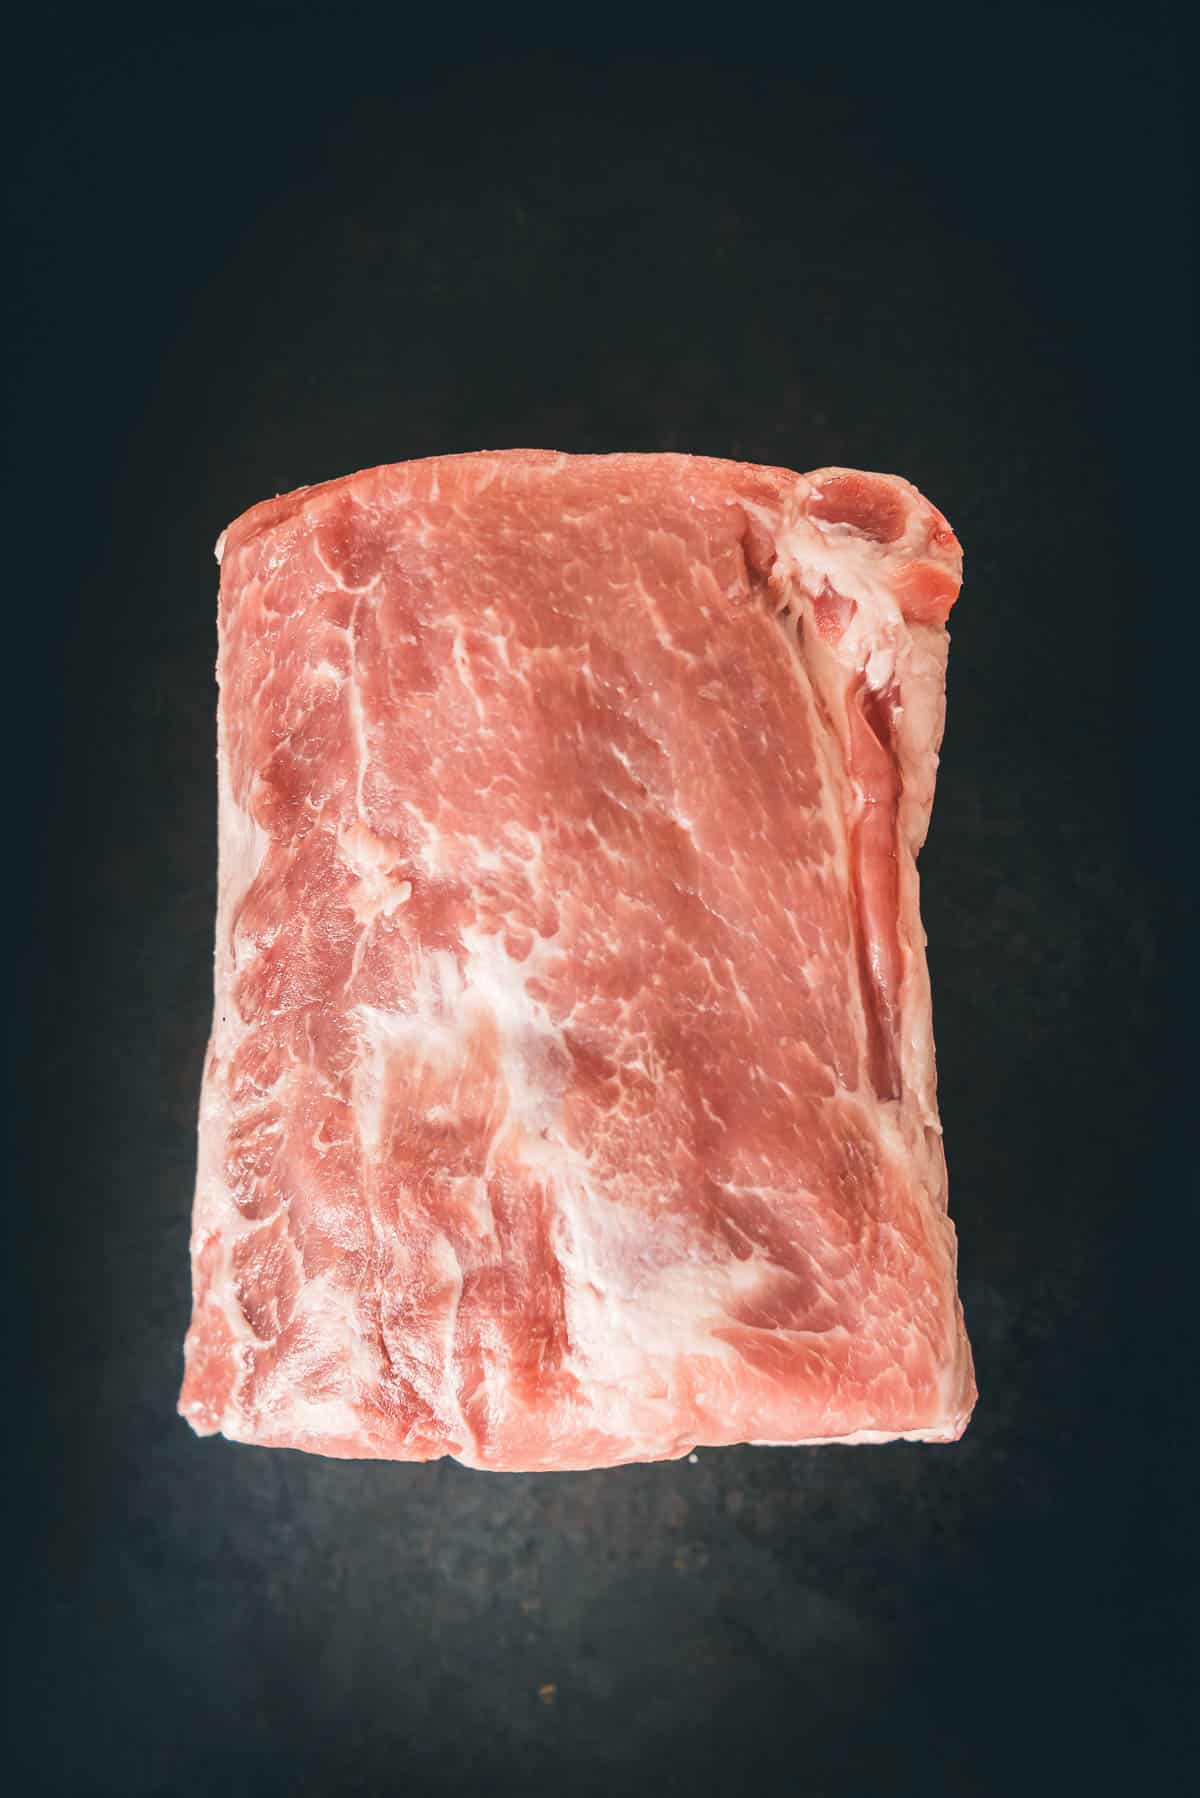 A pork loin roast on a black background.